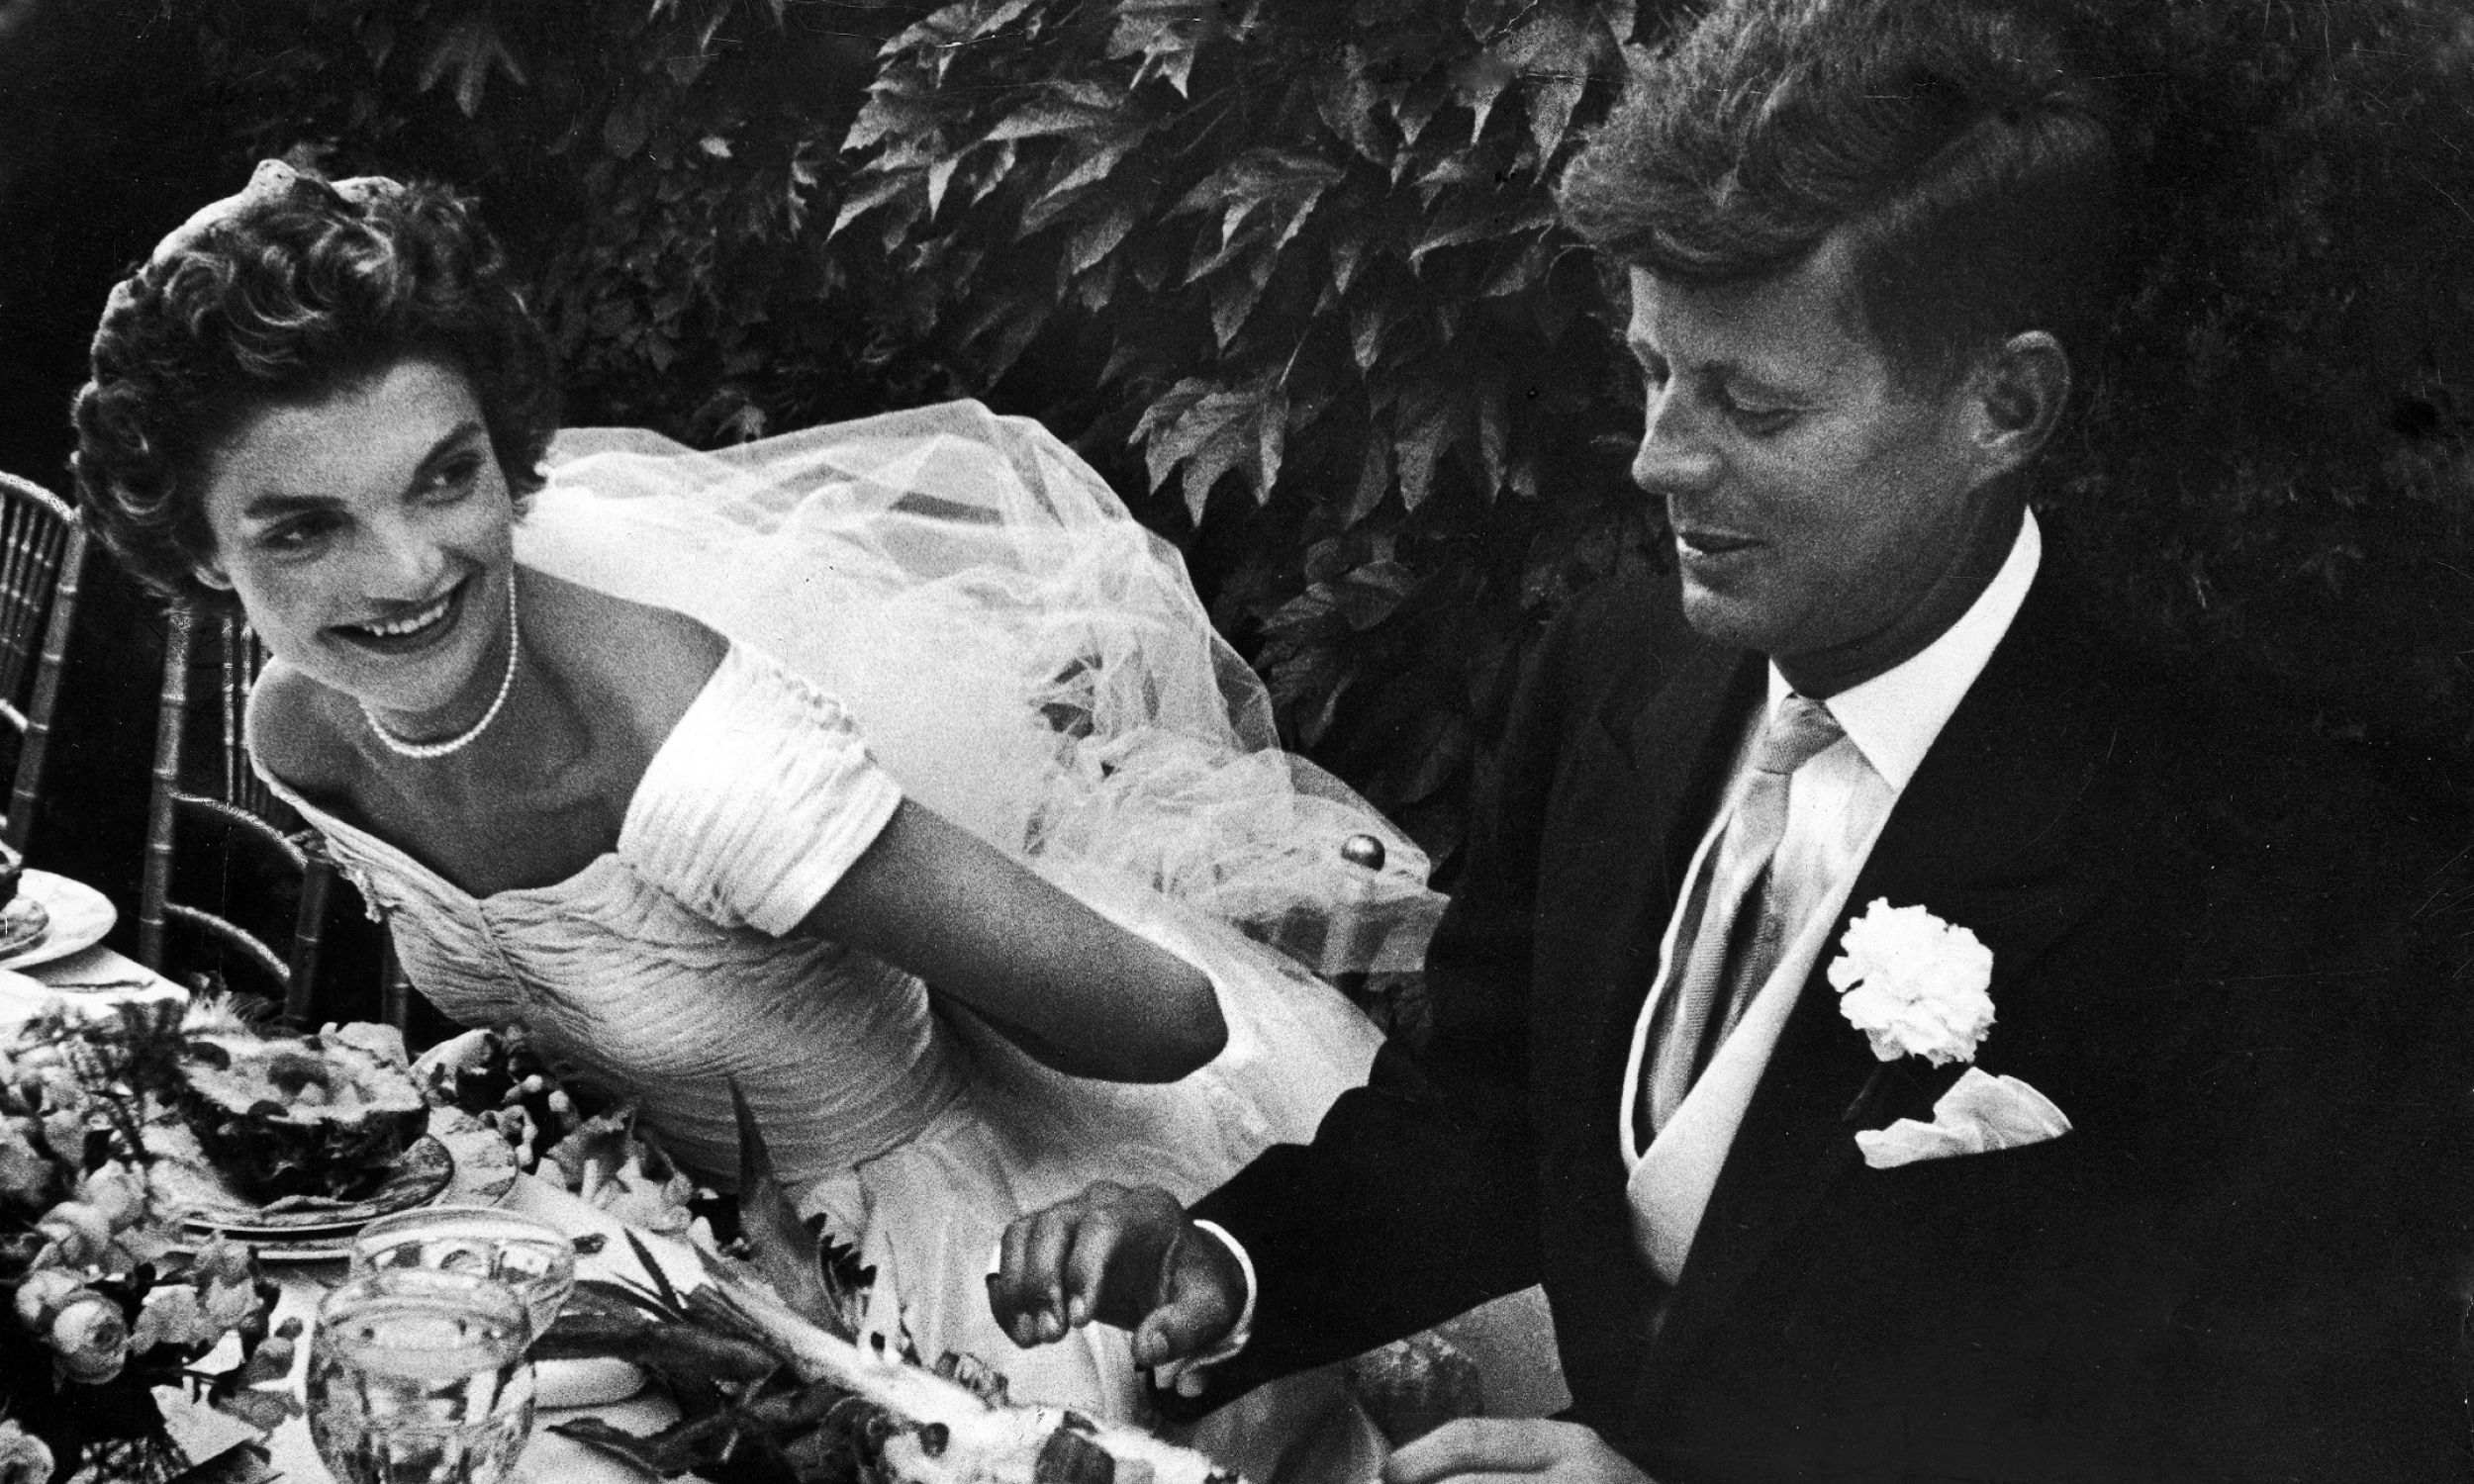 Senator John Kennedy i jego żona Jacqueline podczas ich wesela, na talerzach sałatka ananasowa. Fot. Lisa Larsen / The LIFE Picture Collection via Getty Images